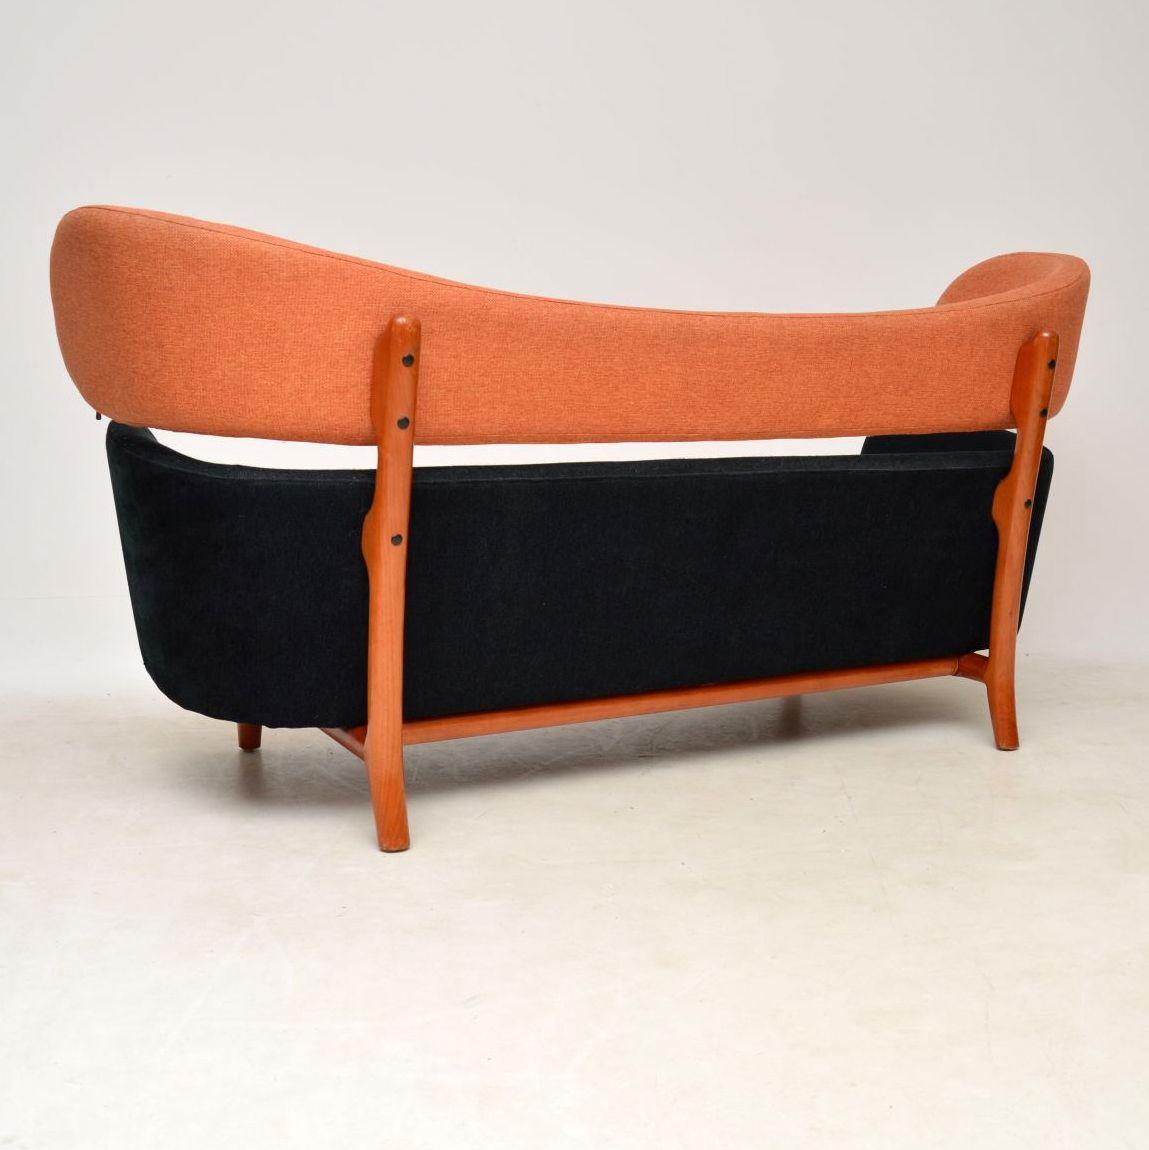 English Finn Juhl Baker Style Retro Sofa